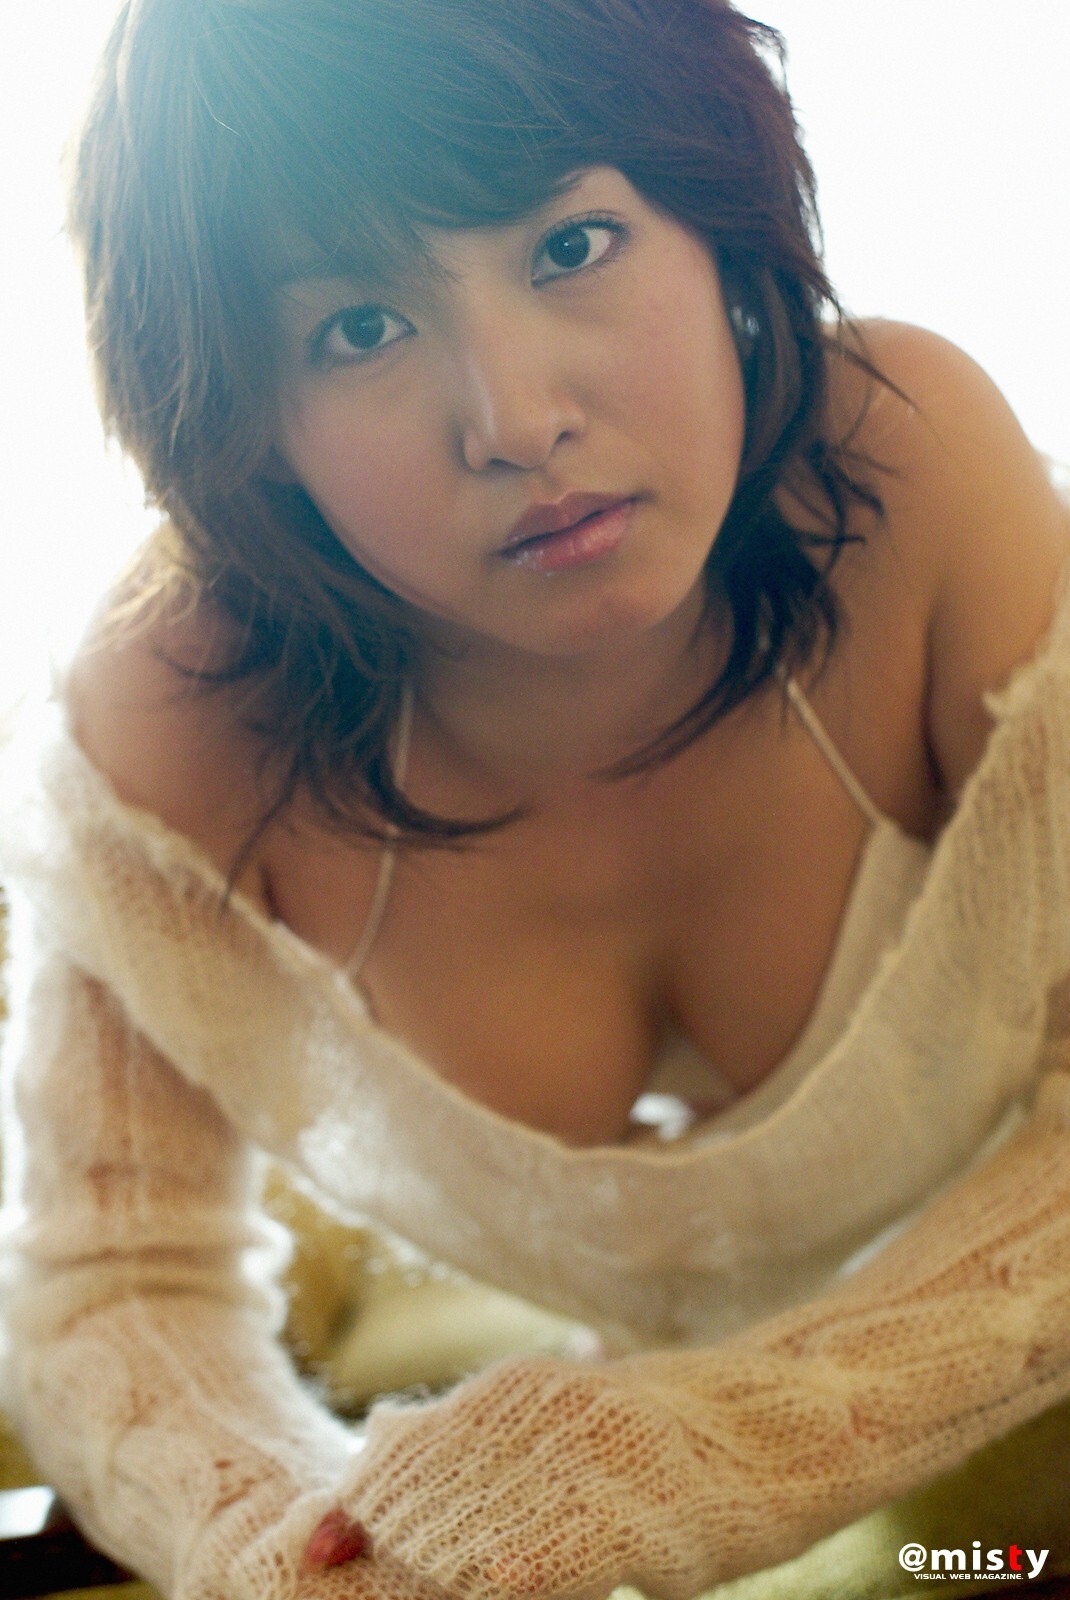 Azuko Otani [@ misty] no.086 - Aiko koyatsu